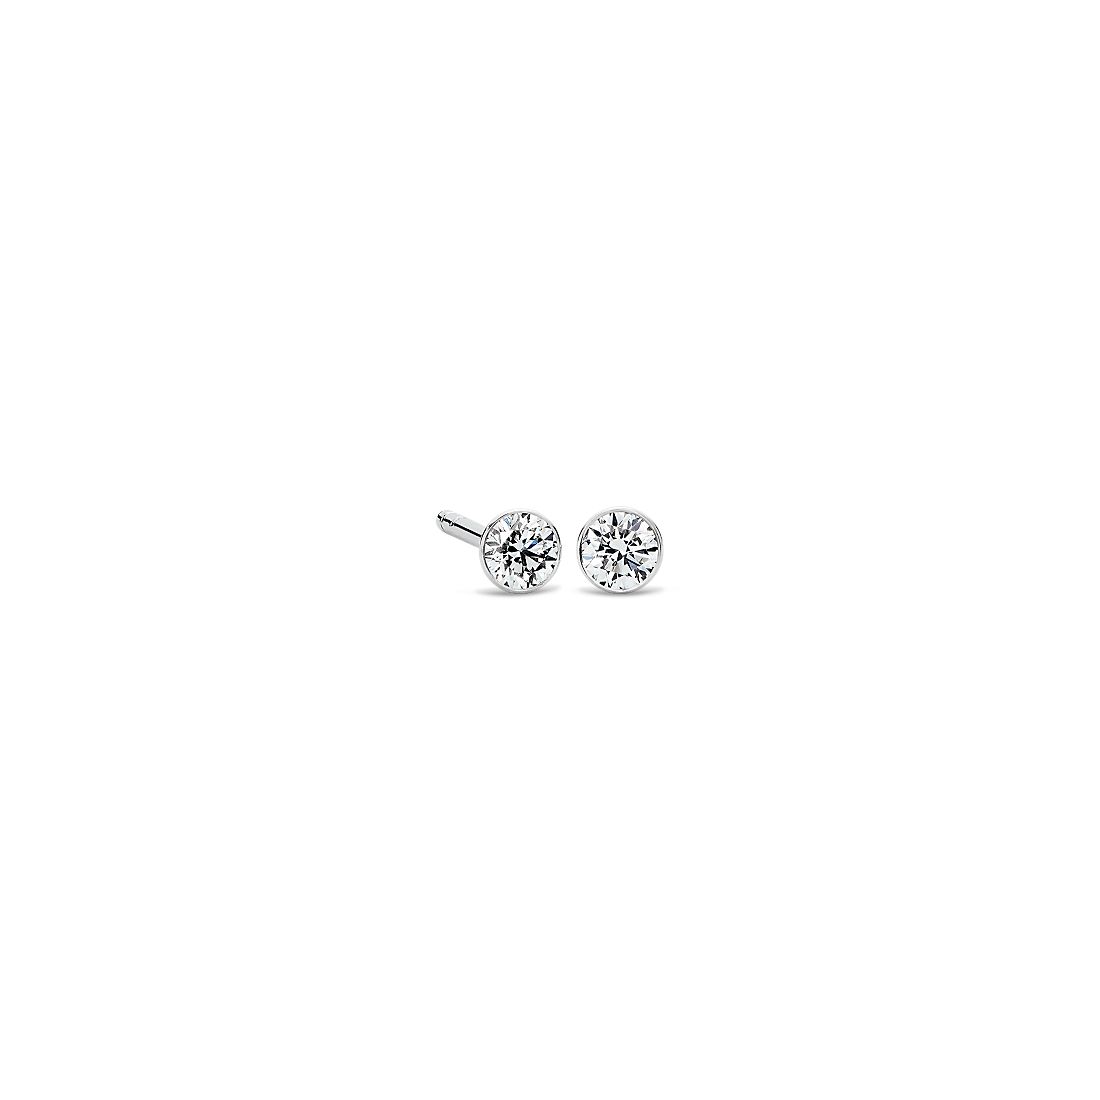 Floating Diamond Stud Earrings in 14k White Gold (1/4 ct. tw.)